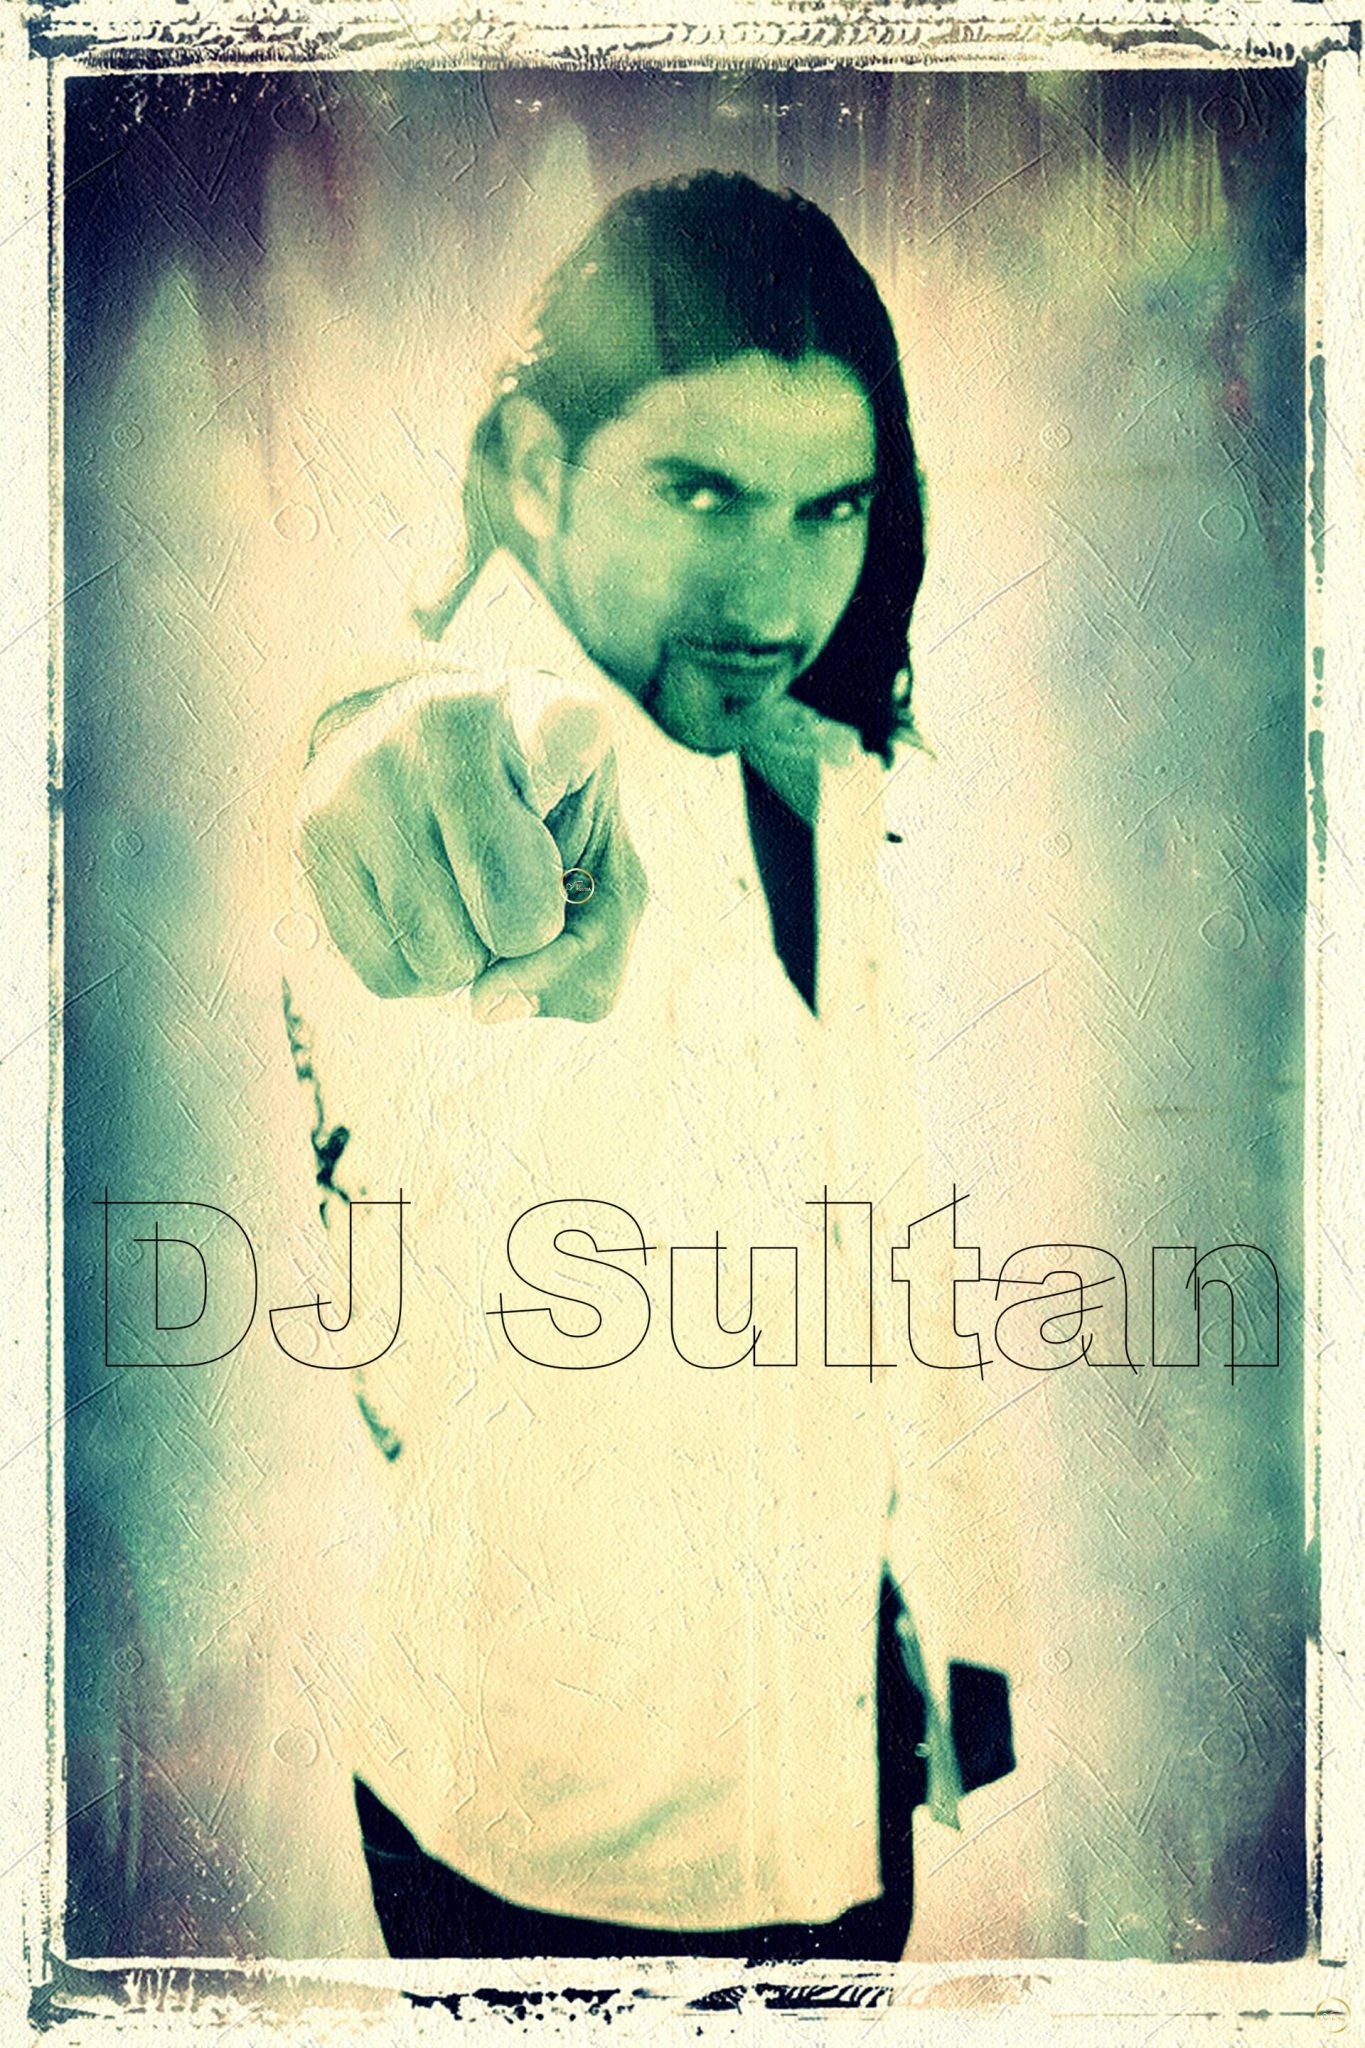 DJ Sultan